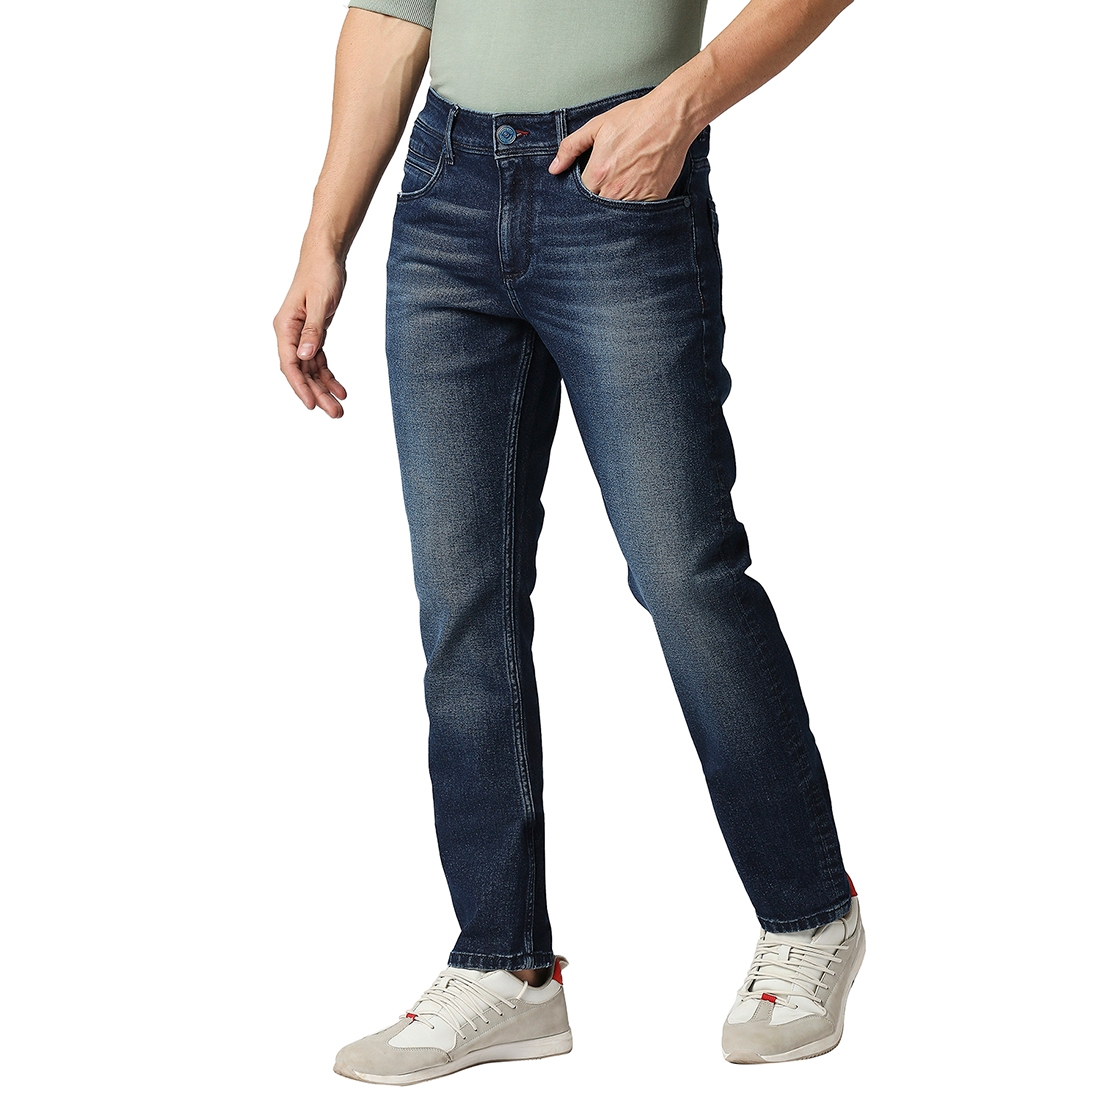 Basics | Men's Navy Cotton Blend Solid Jeans 2